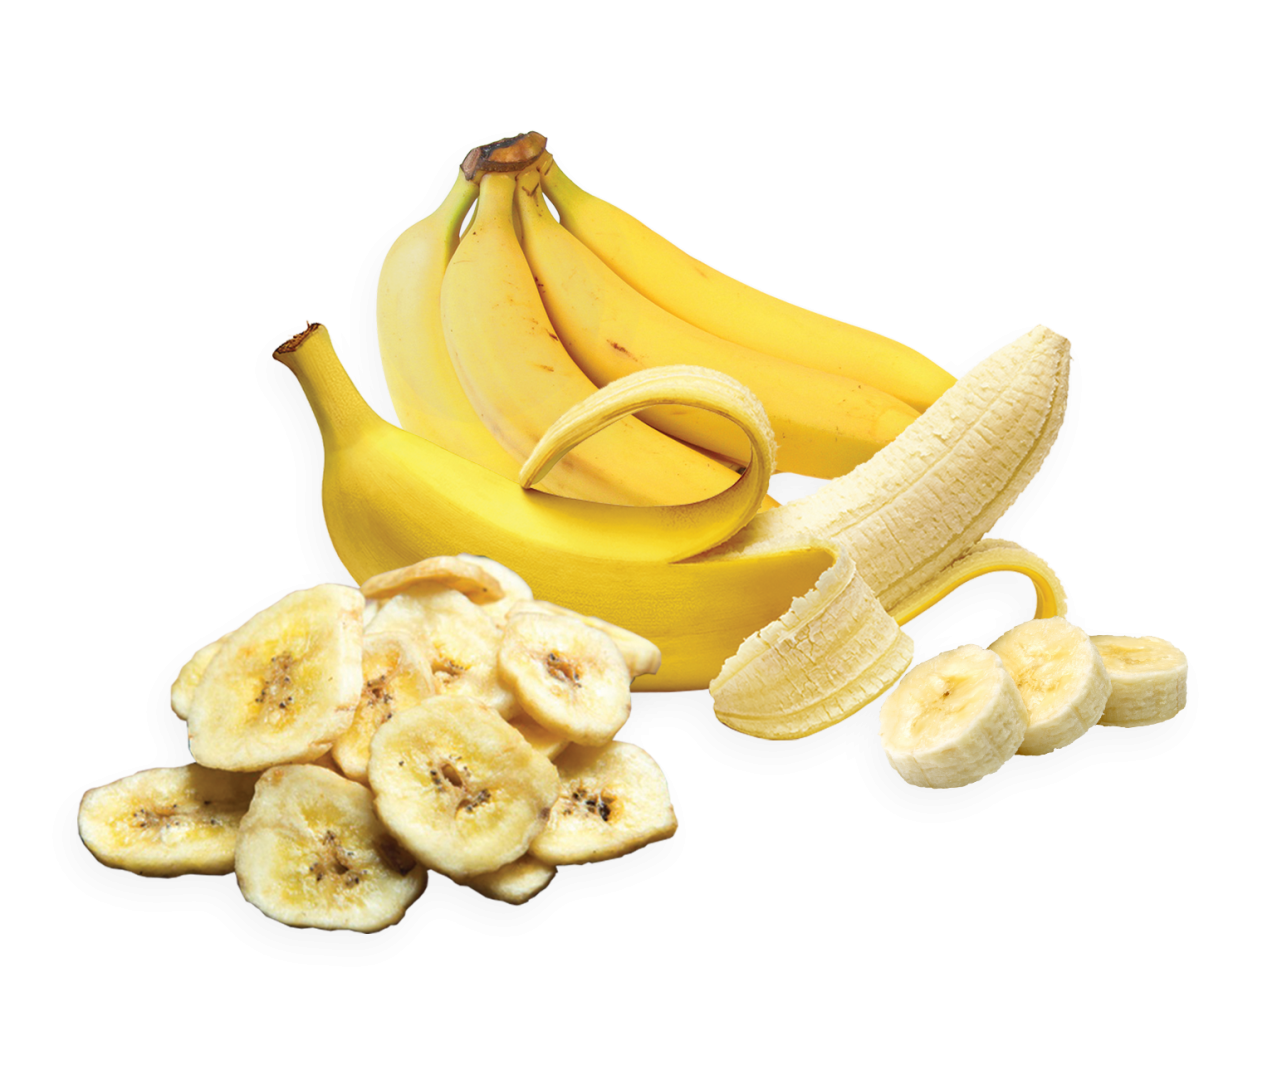 Fresh Dried Banana Free Download Image PNG Image